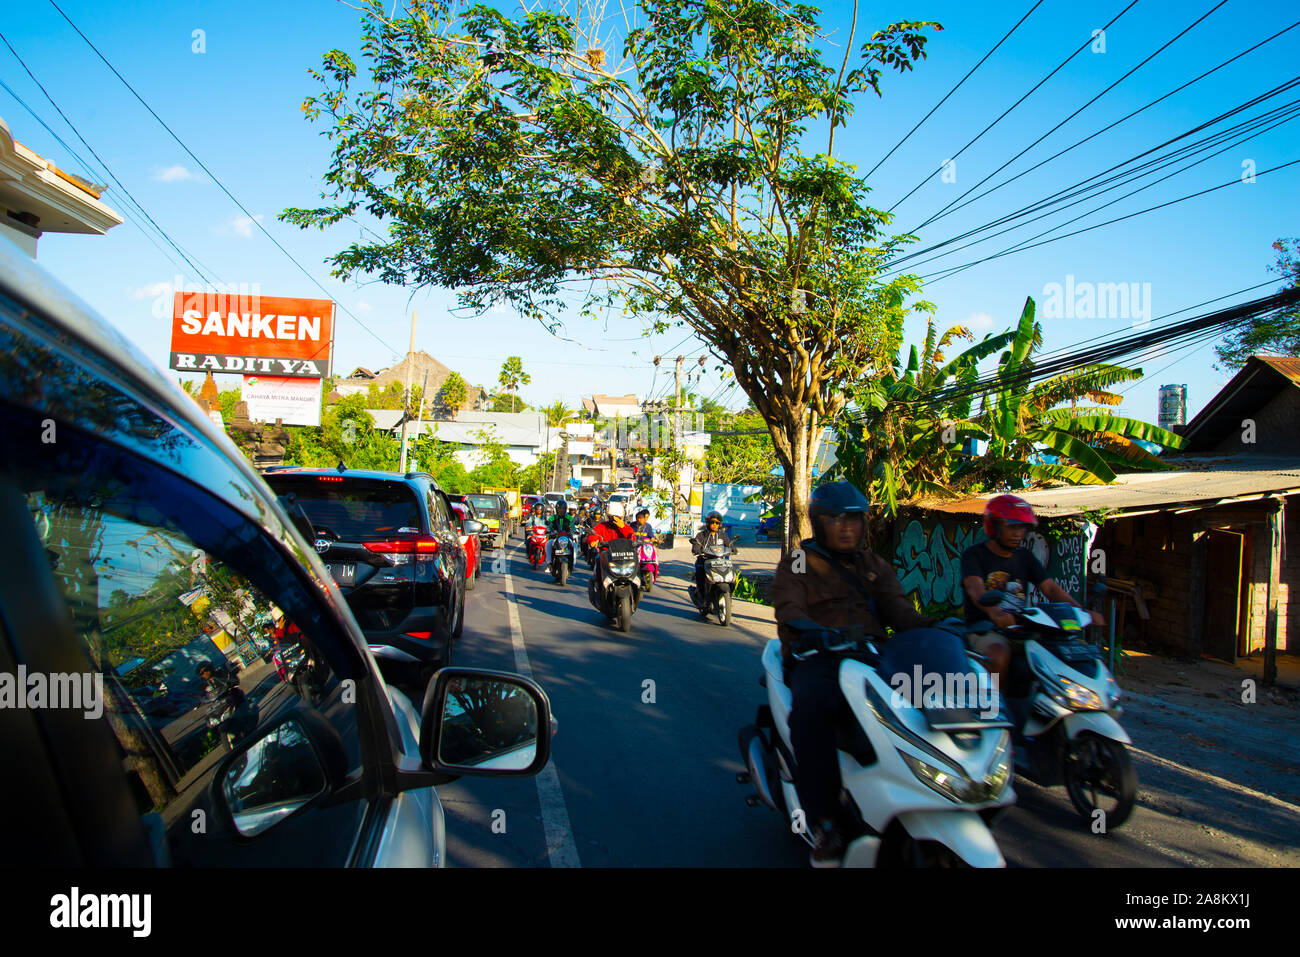 Denpasar, Indonesia - September 2, 2019: Moped transportation in Bali Island Stock Photo